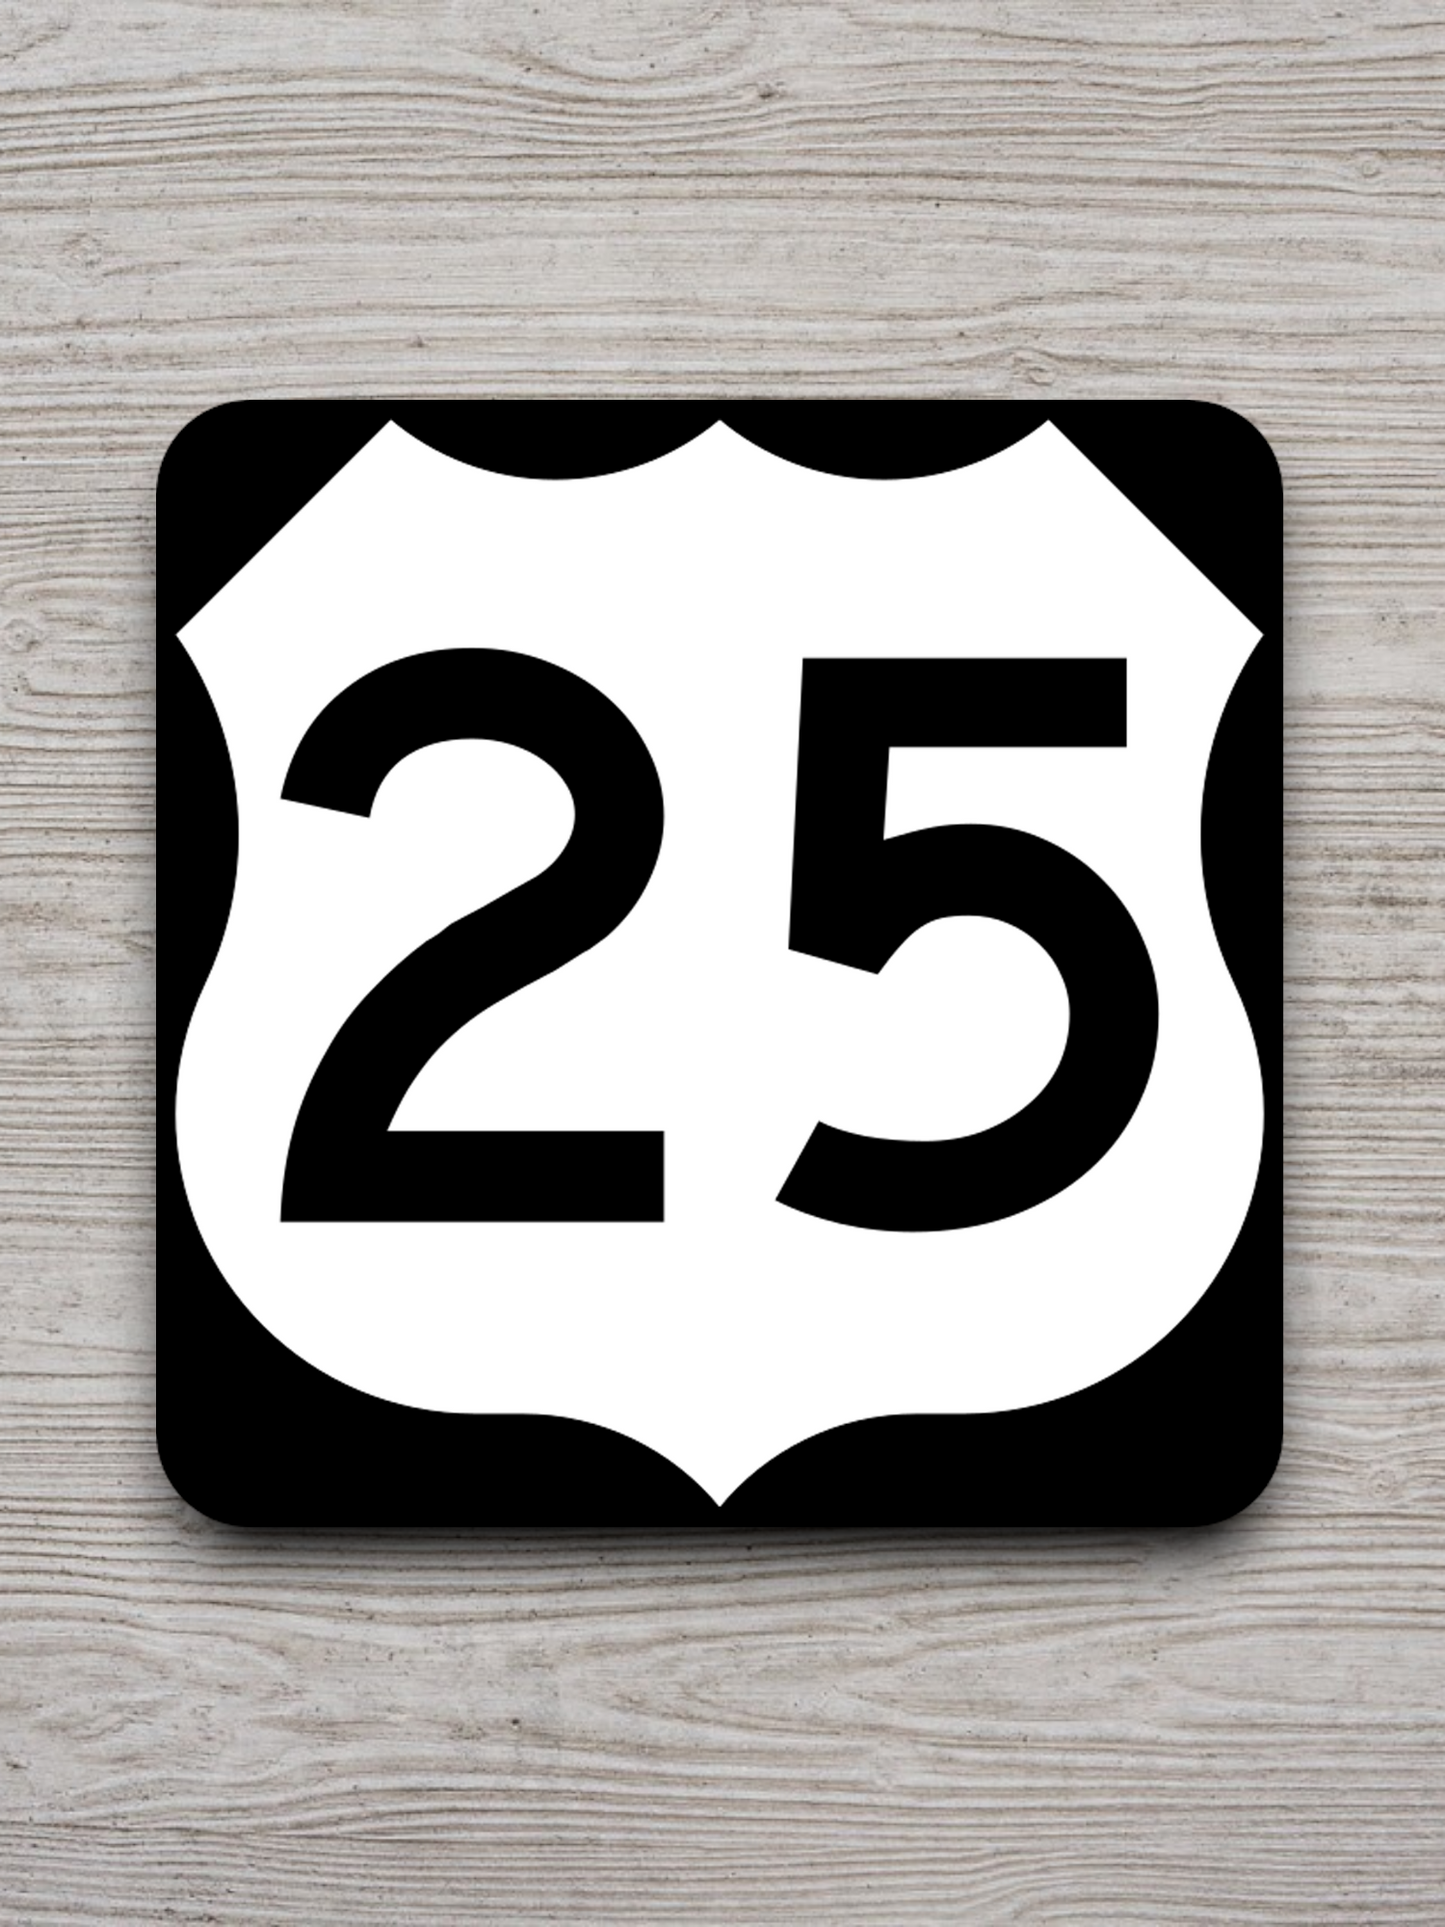 U.S. Route 25 Road Sign Sticker